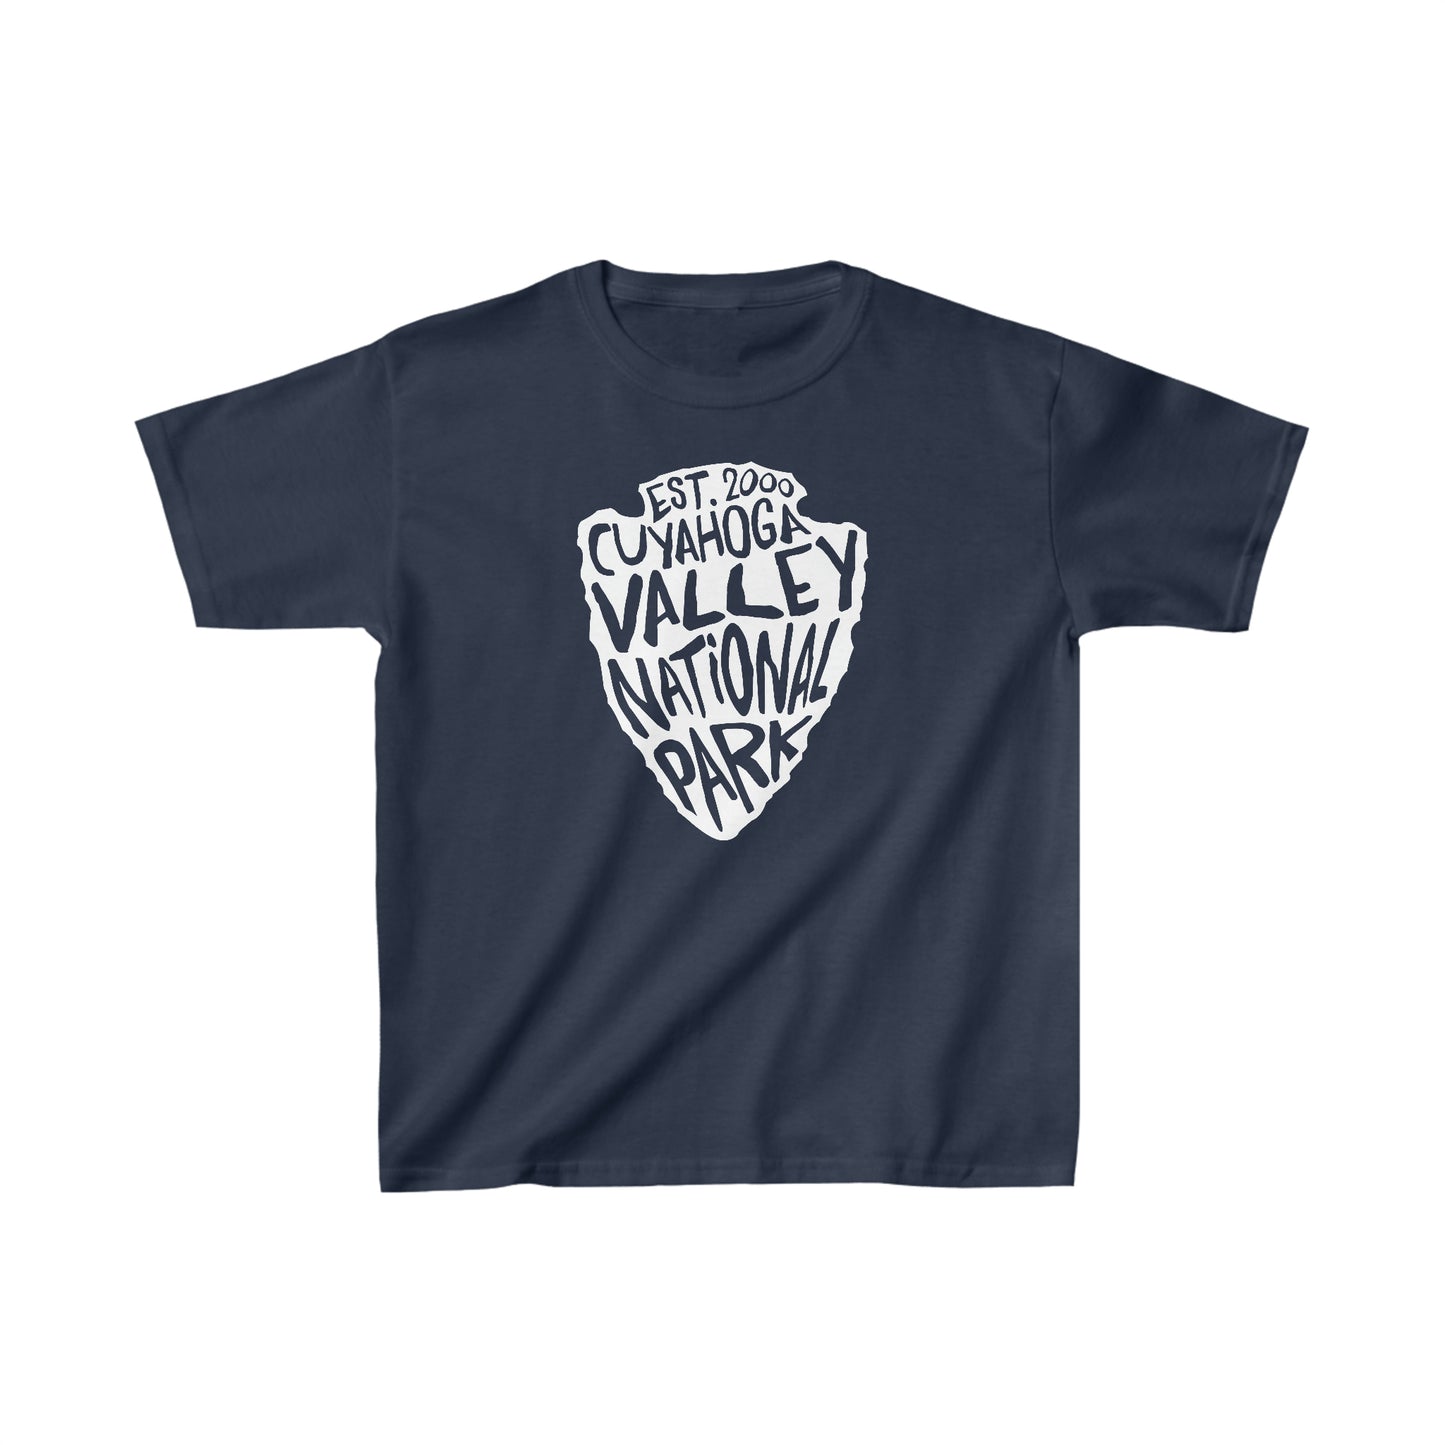 Cuyahoga Valley National Park Child T-Shirt - Arrowhead Design